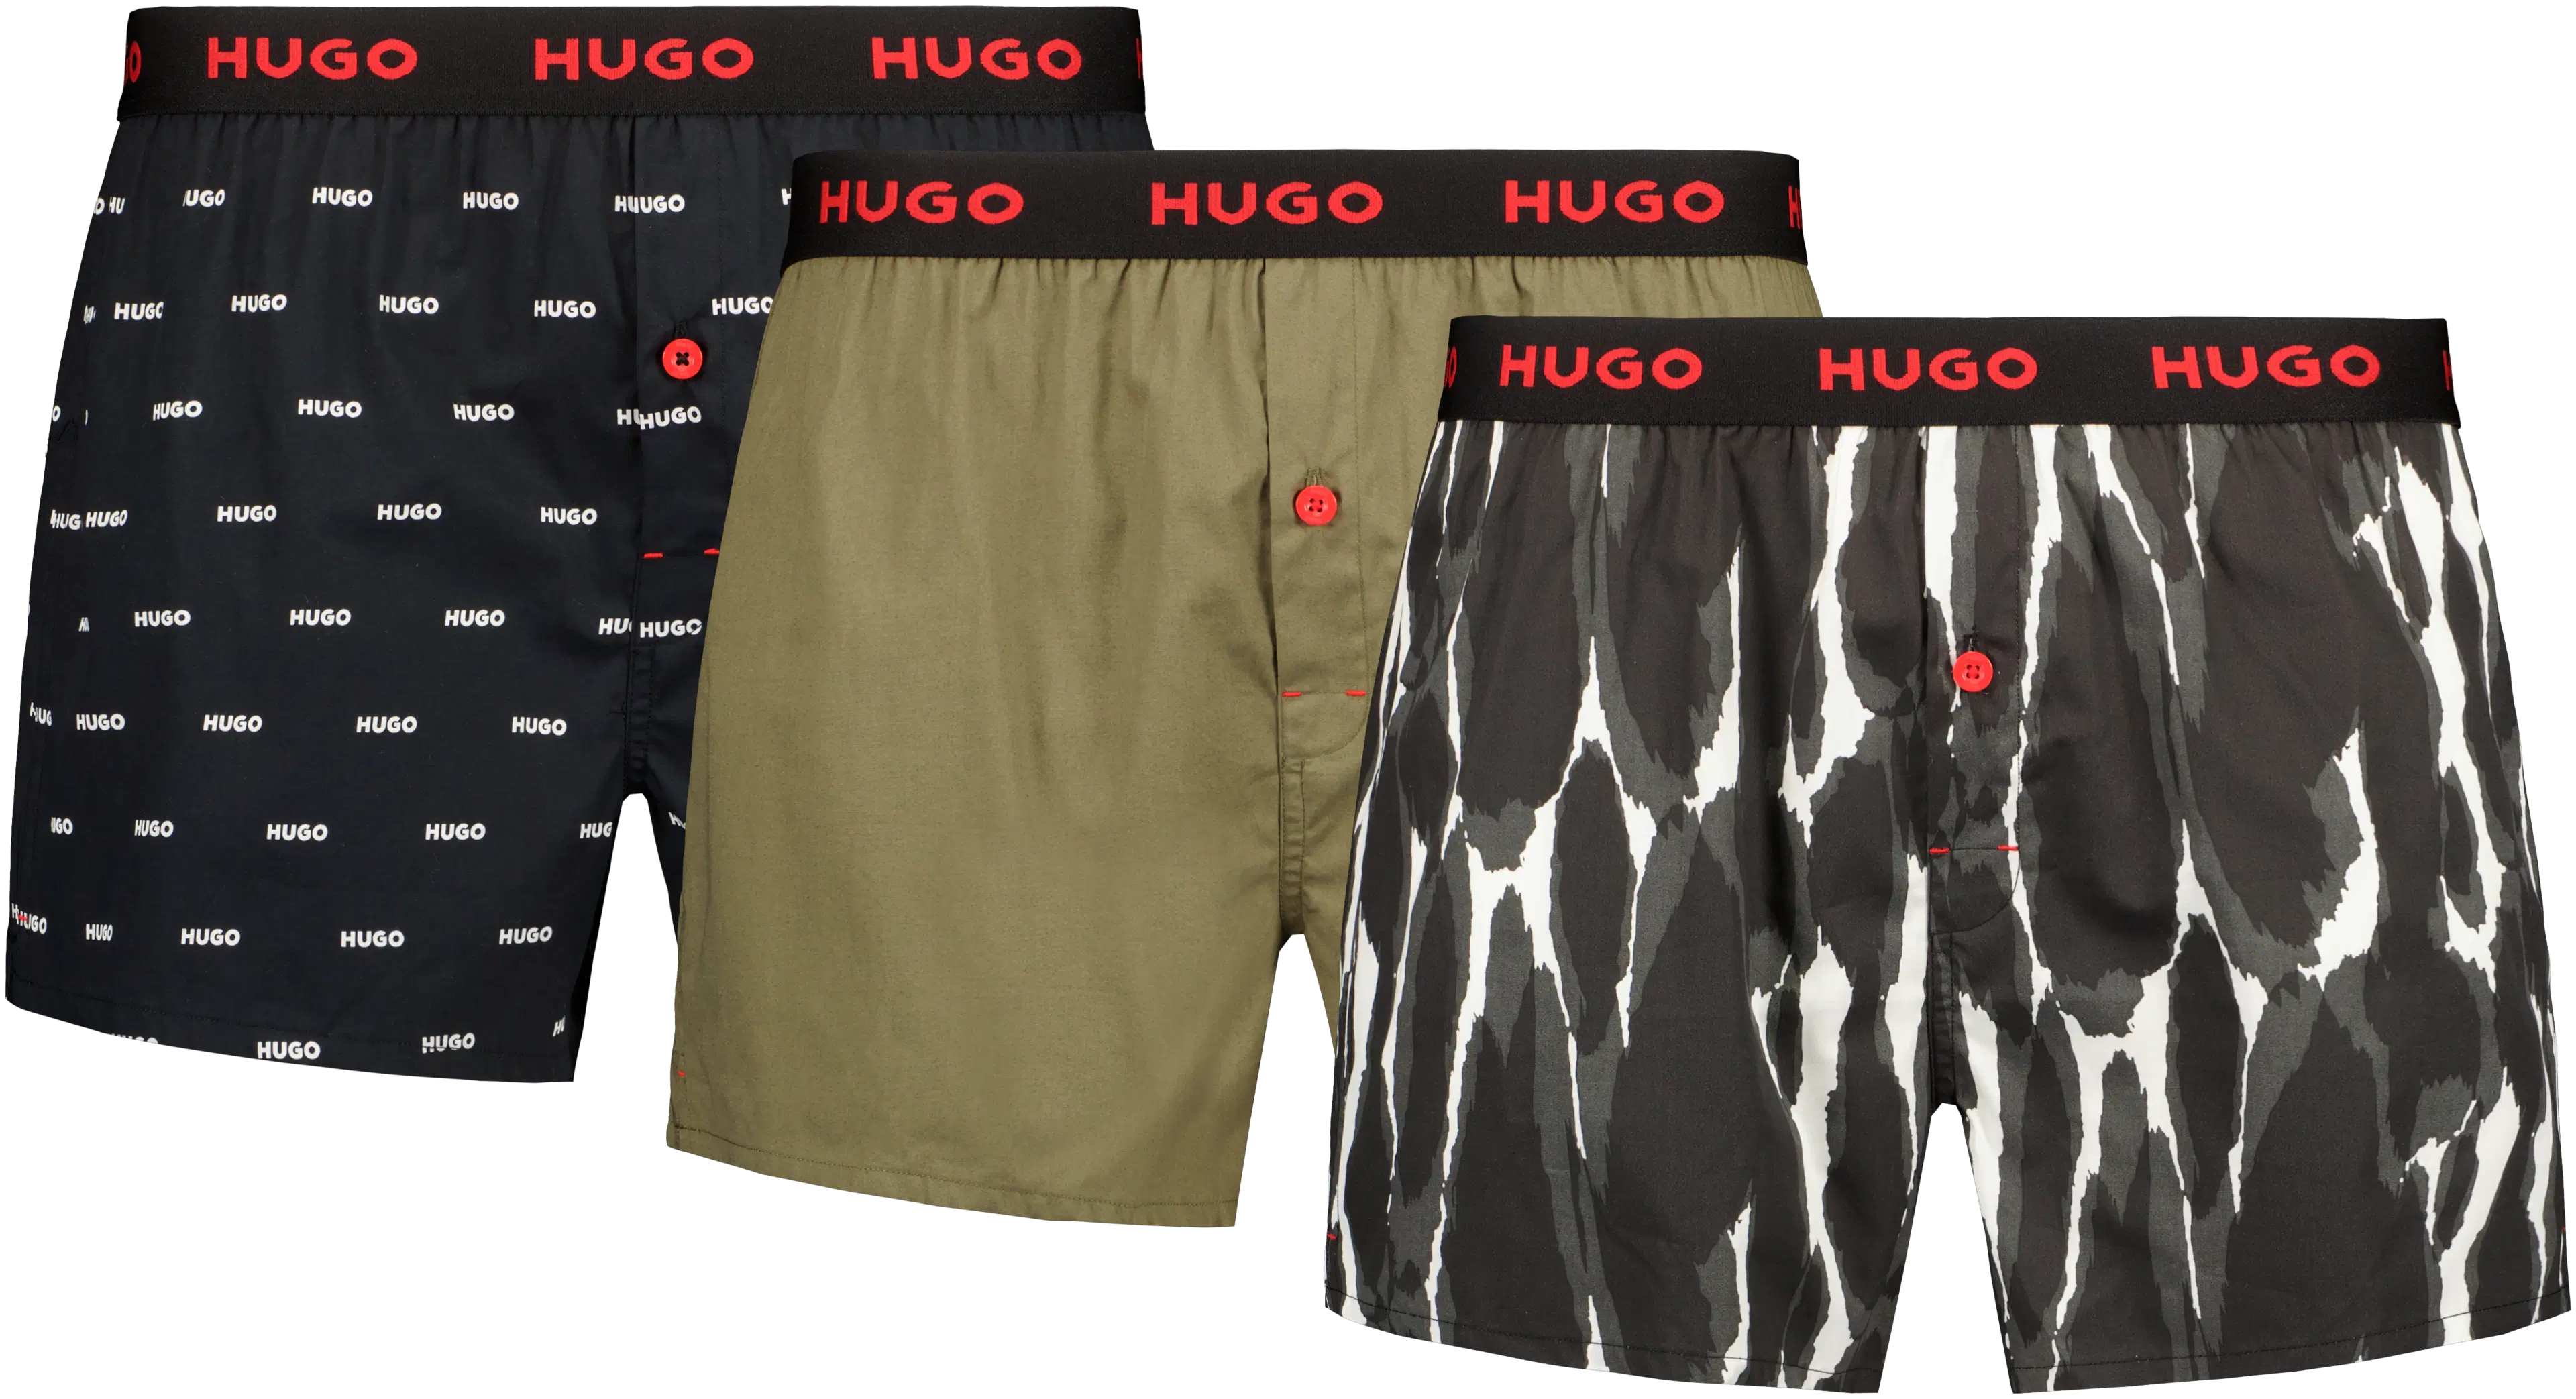 Hugo Woven Boxer Triplet alushousut